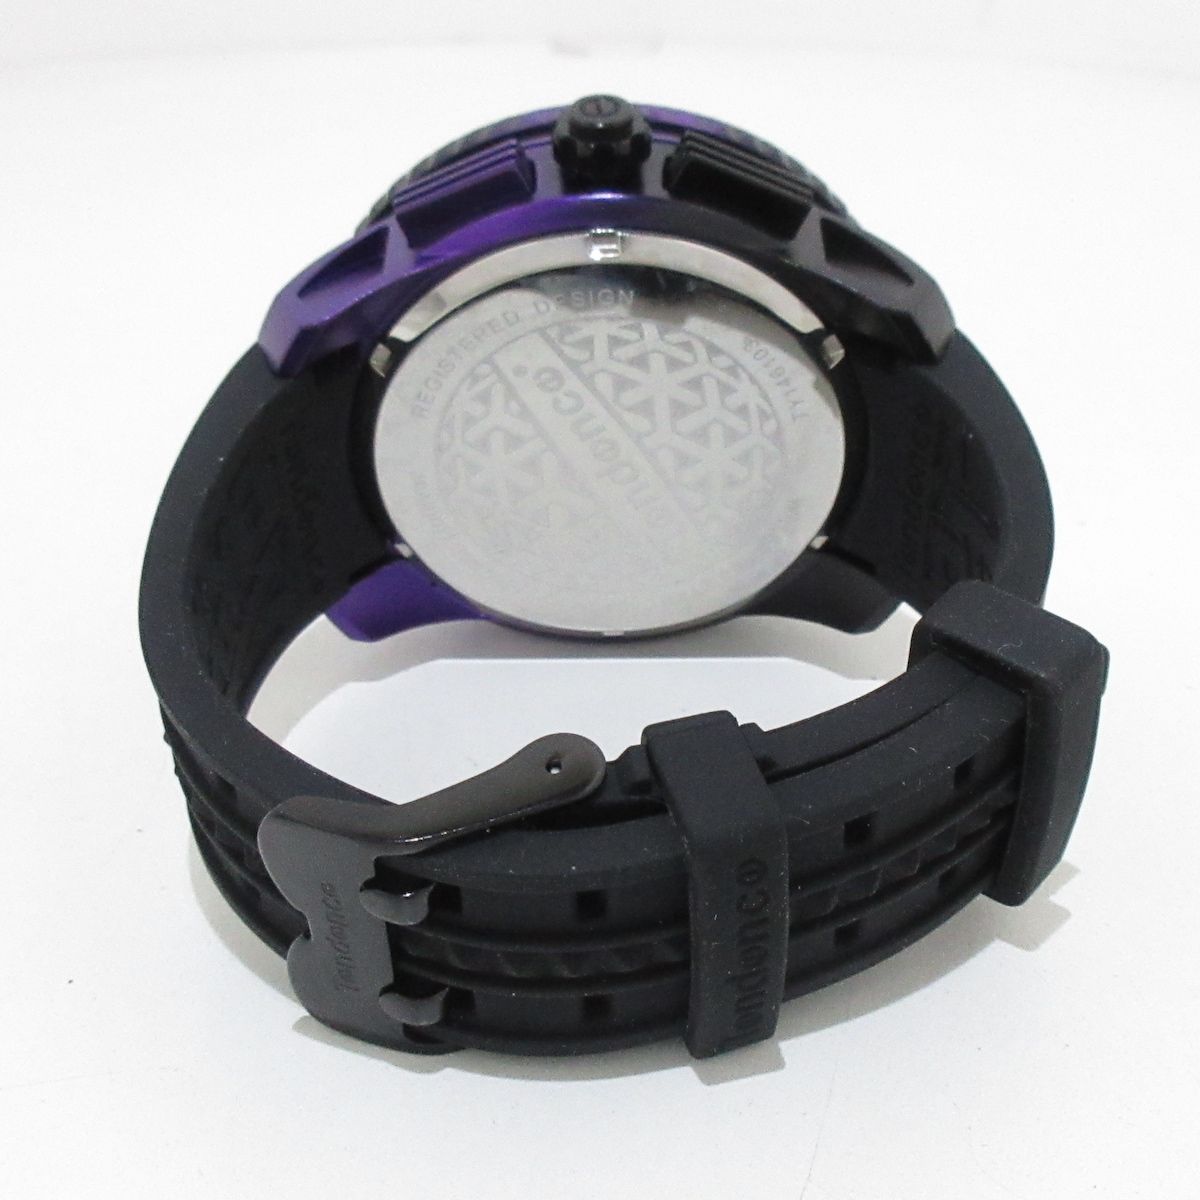 TENDENCE(テンデンス) 腕時計美品 De'Color TY146103 メンズ クロノ 